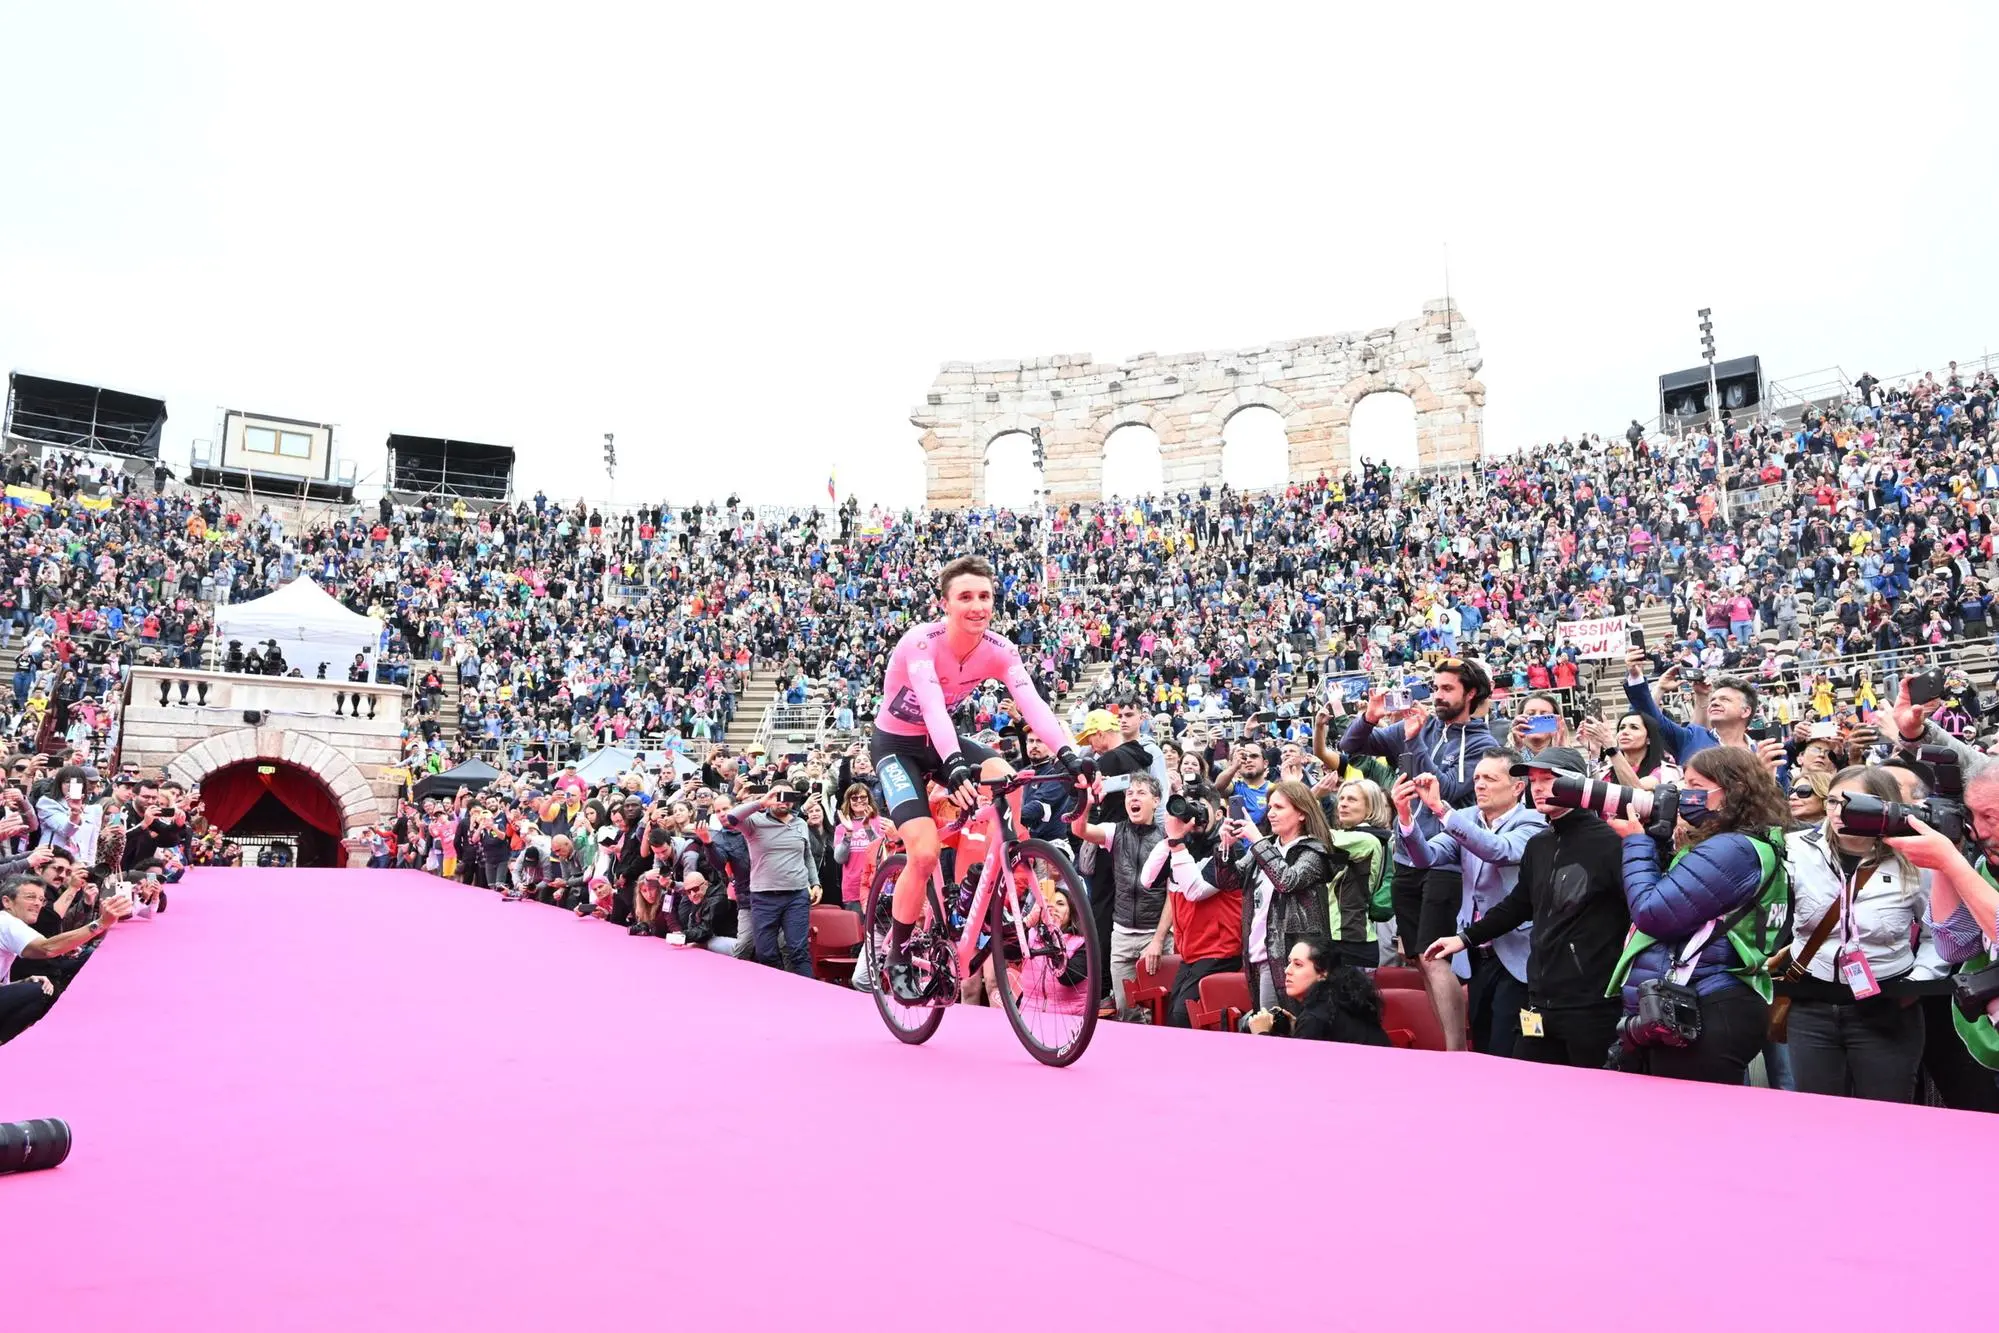 Australian rider Jai Hindley of the Bora-Hansgrohe team wins the 105th Giro d'Italia cycling tour in Verona, Italy, 29 May 2022. ANSA/MAURIZIO BRAMBATTI